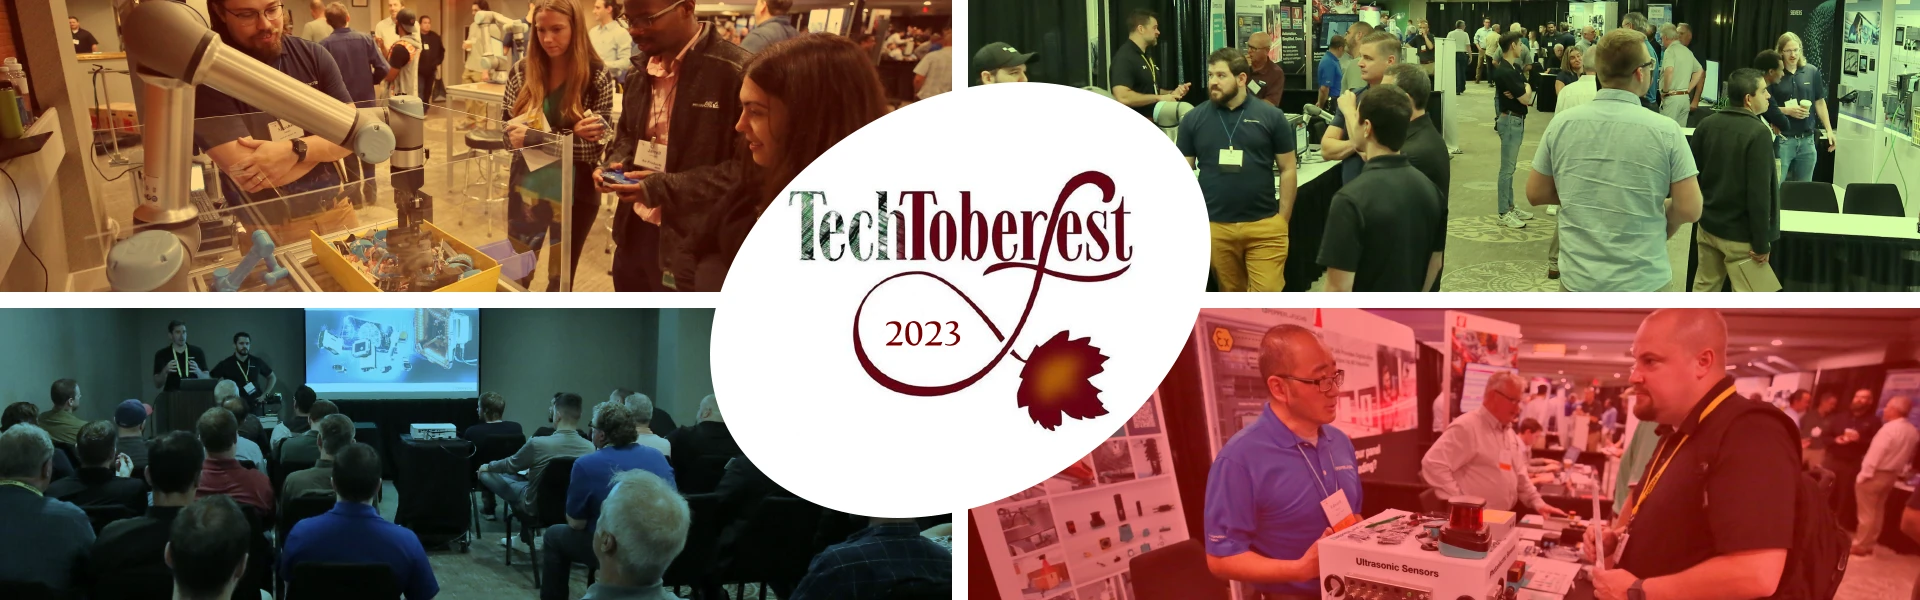 Thank You for Attending TechToberFest 2023!